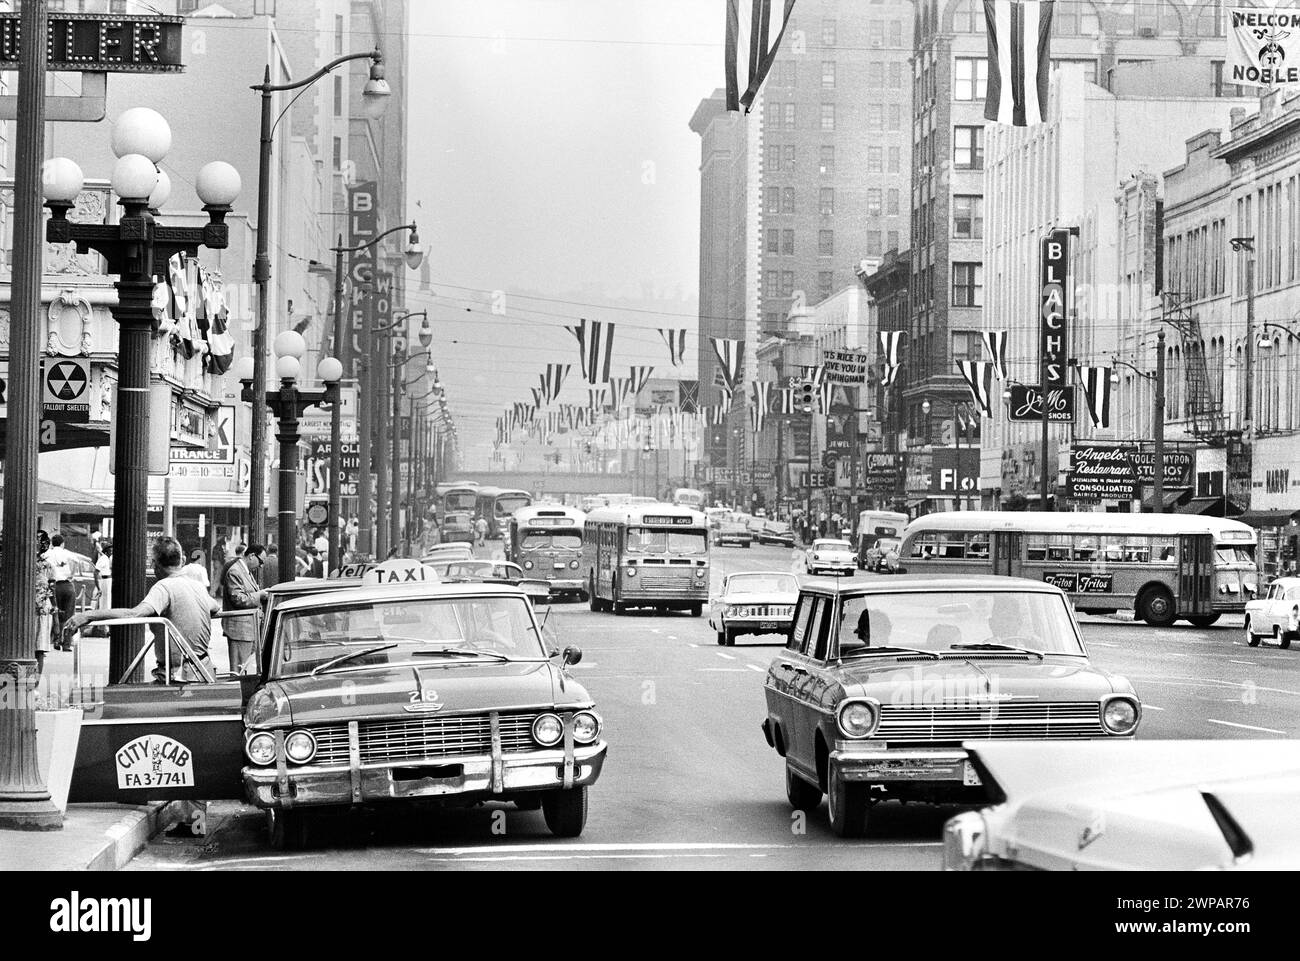 Street scene, commercial district, Birmingham, Alabama, USA, Marion S. Trikosko, U.S. News & World Report Magazine Photograph Collection, May 14, 1963 Stock Photo